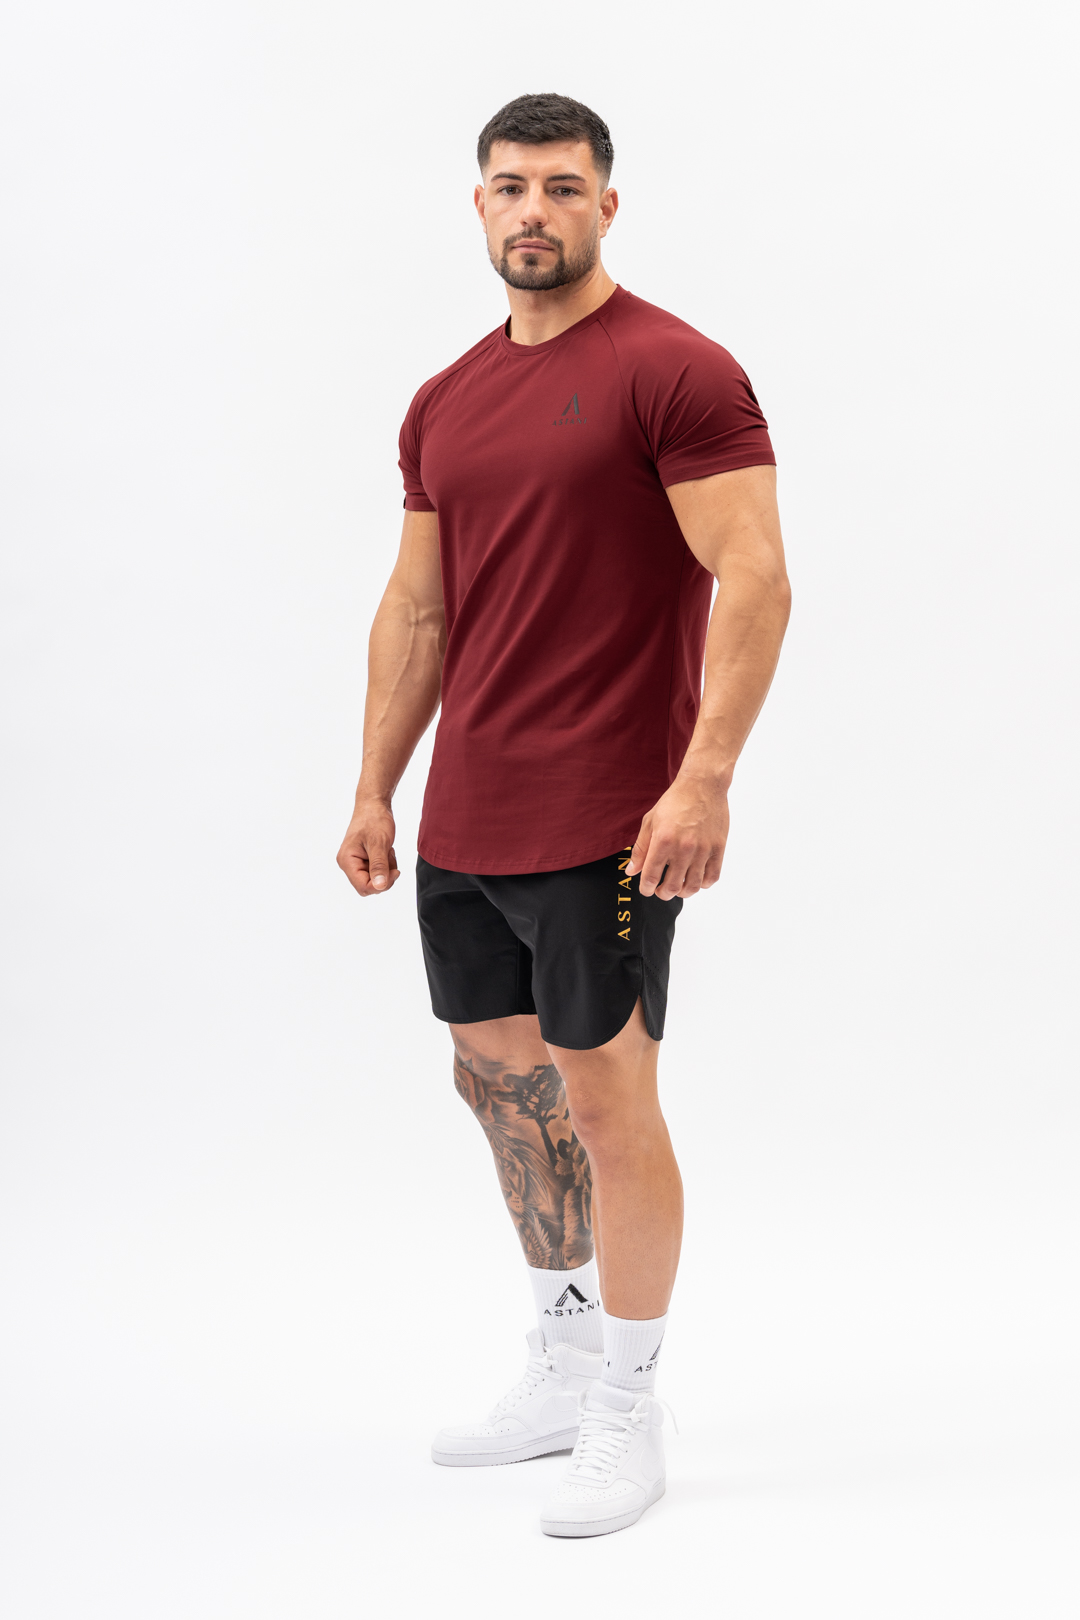 Code Burgundy Cotton Stretch Workout Gym Lifestyle T-Shirt